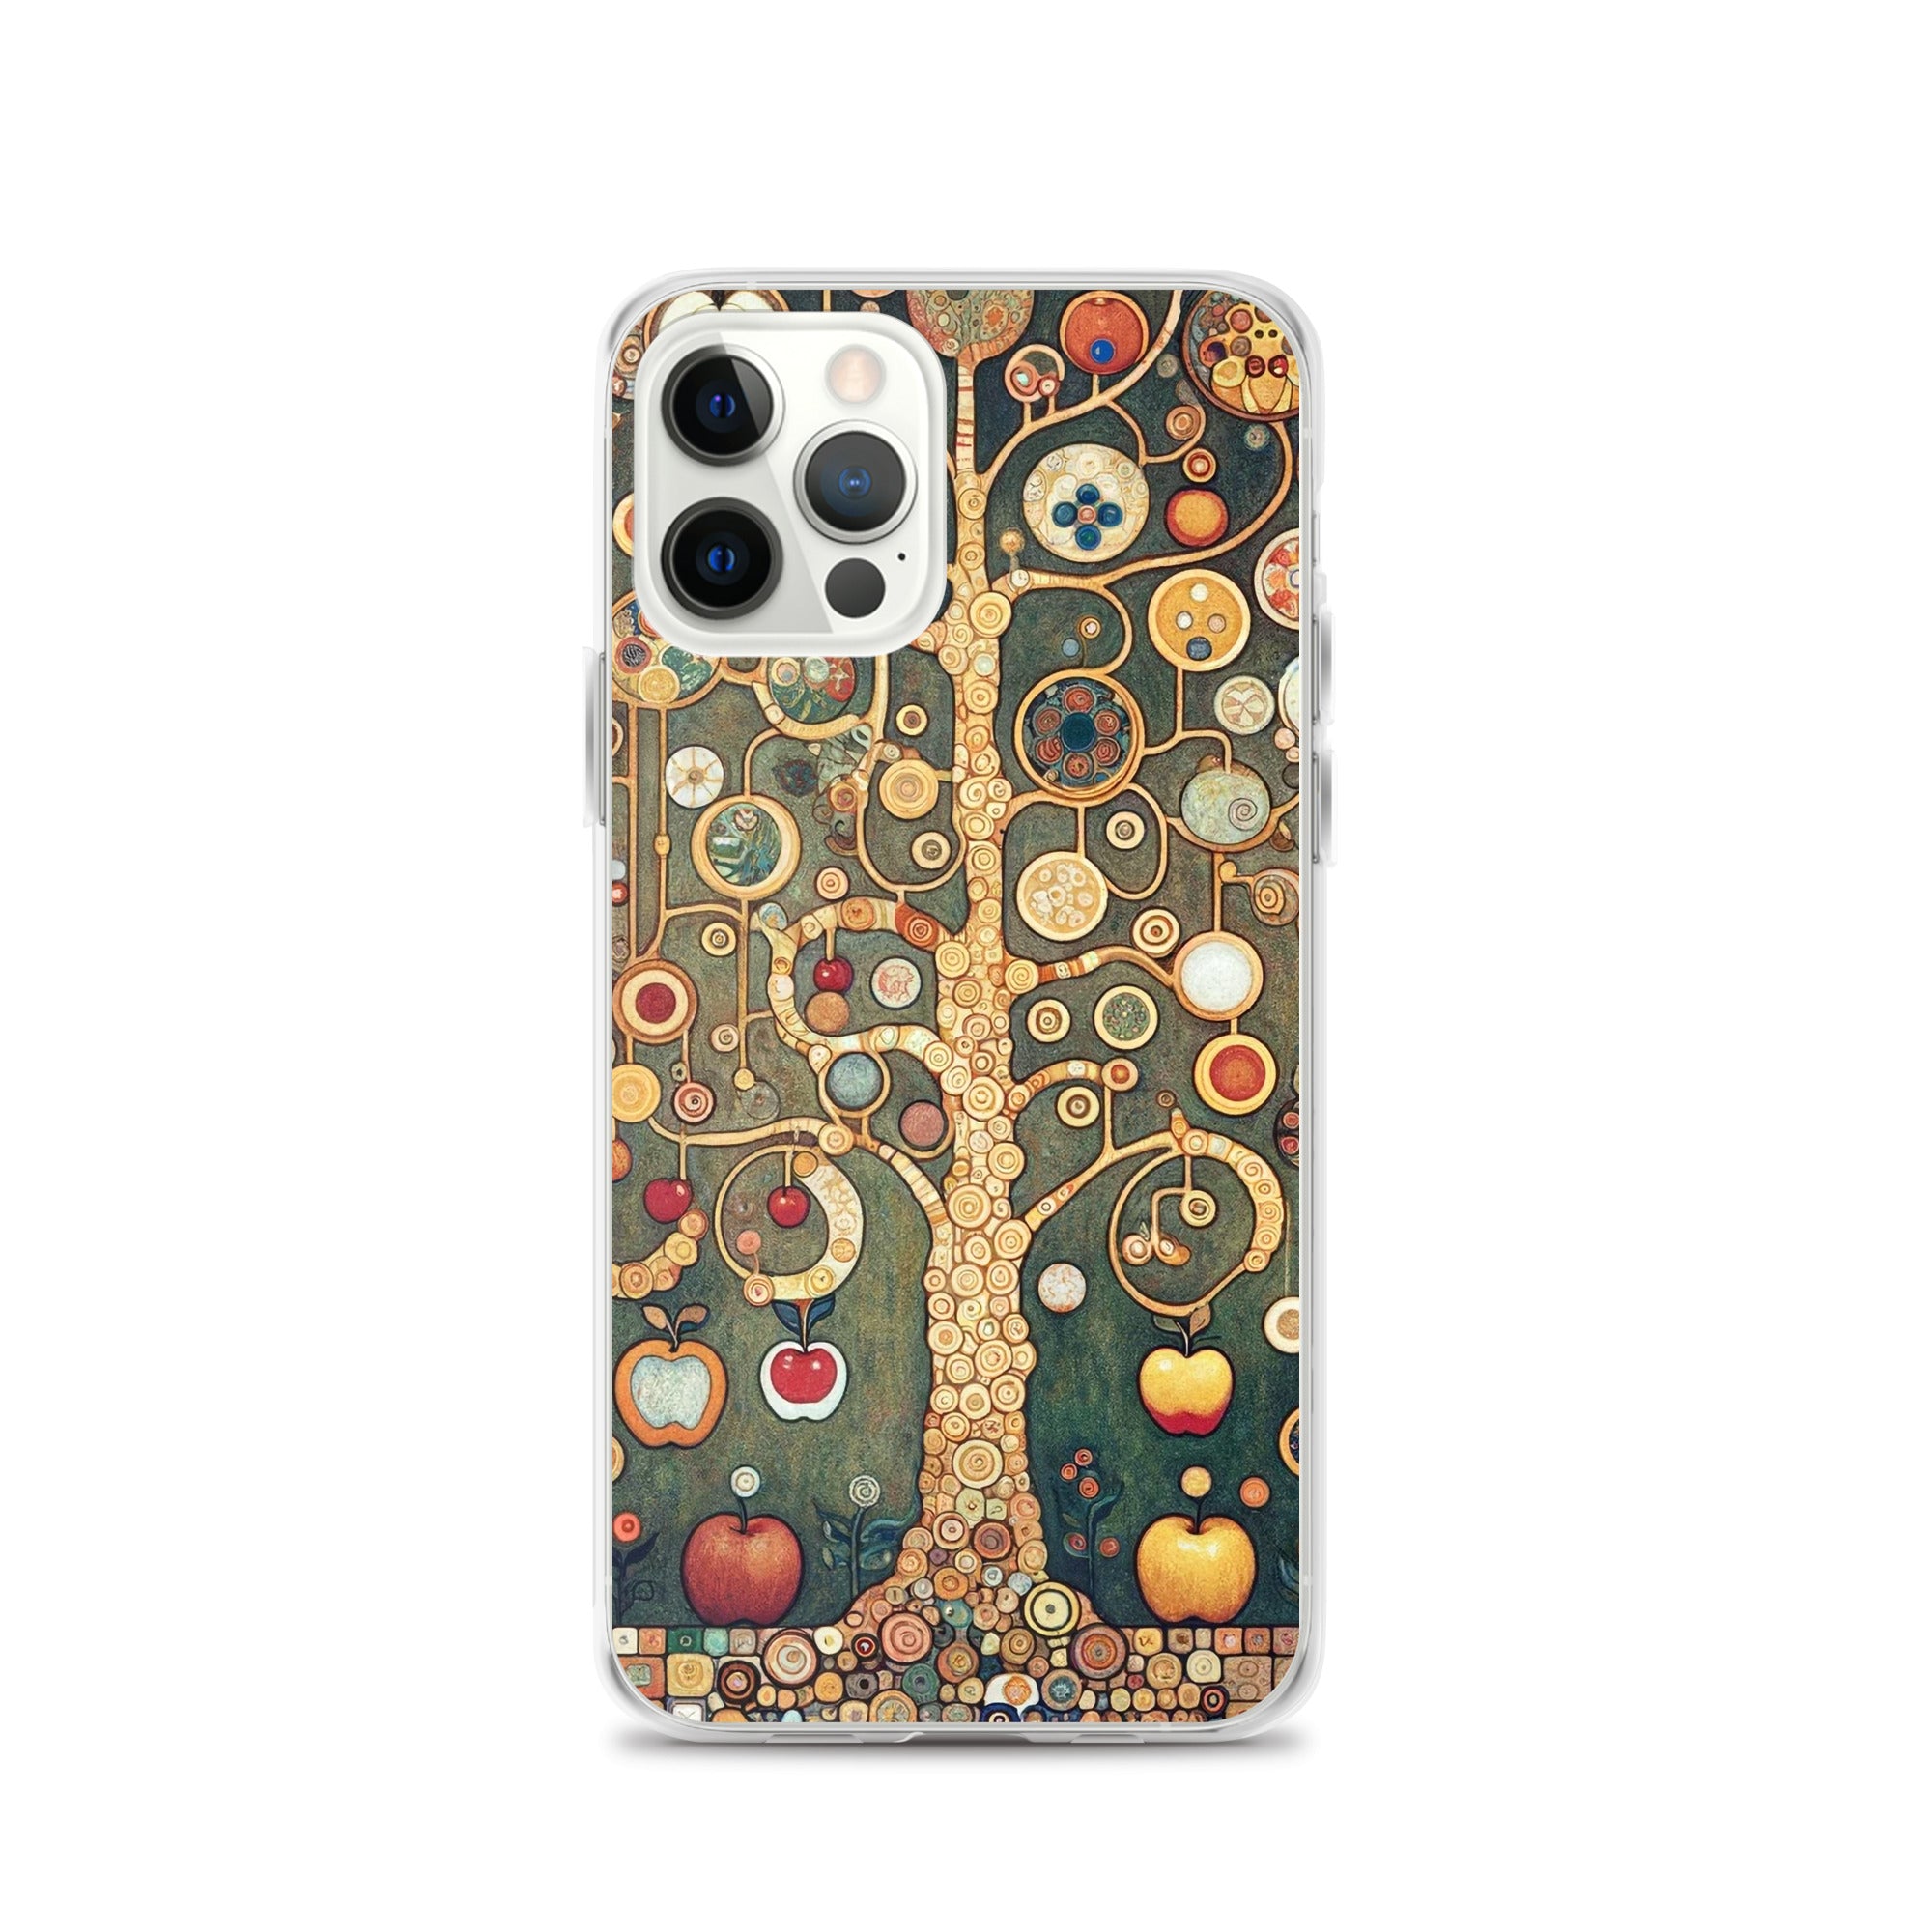 Gustav Klimt „Apfelbaum I“ Berühmtes Gemälde iPhone® Hülle | Transparente Kunsthülle für iPhone®